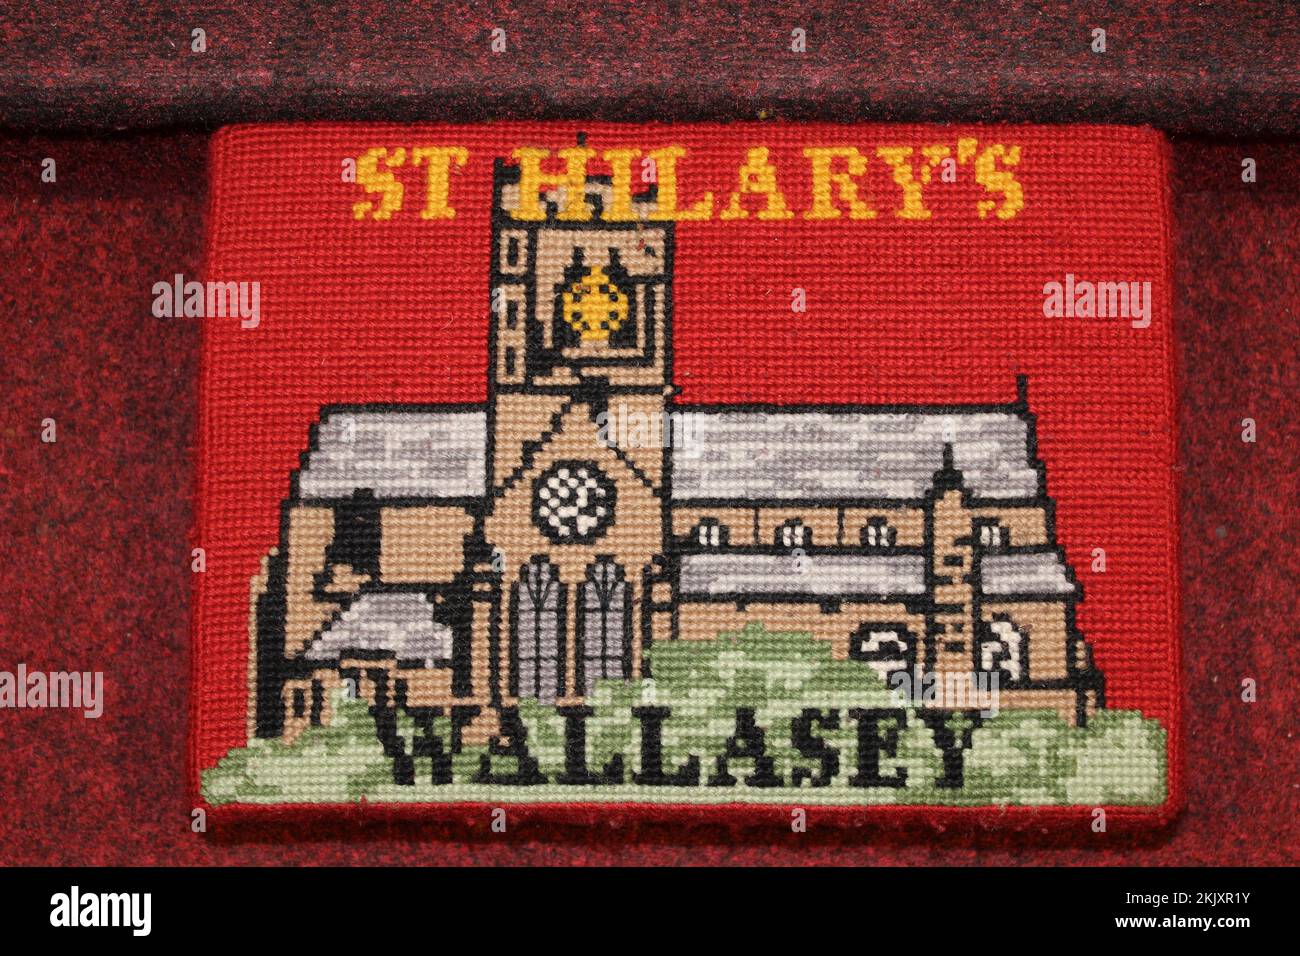 St Hilary's Church, Wallasey UK - Prayer Stool Stock Photo